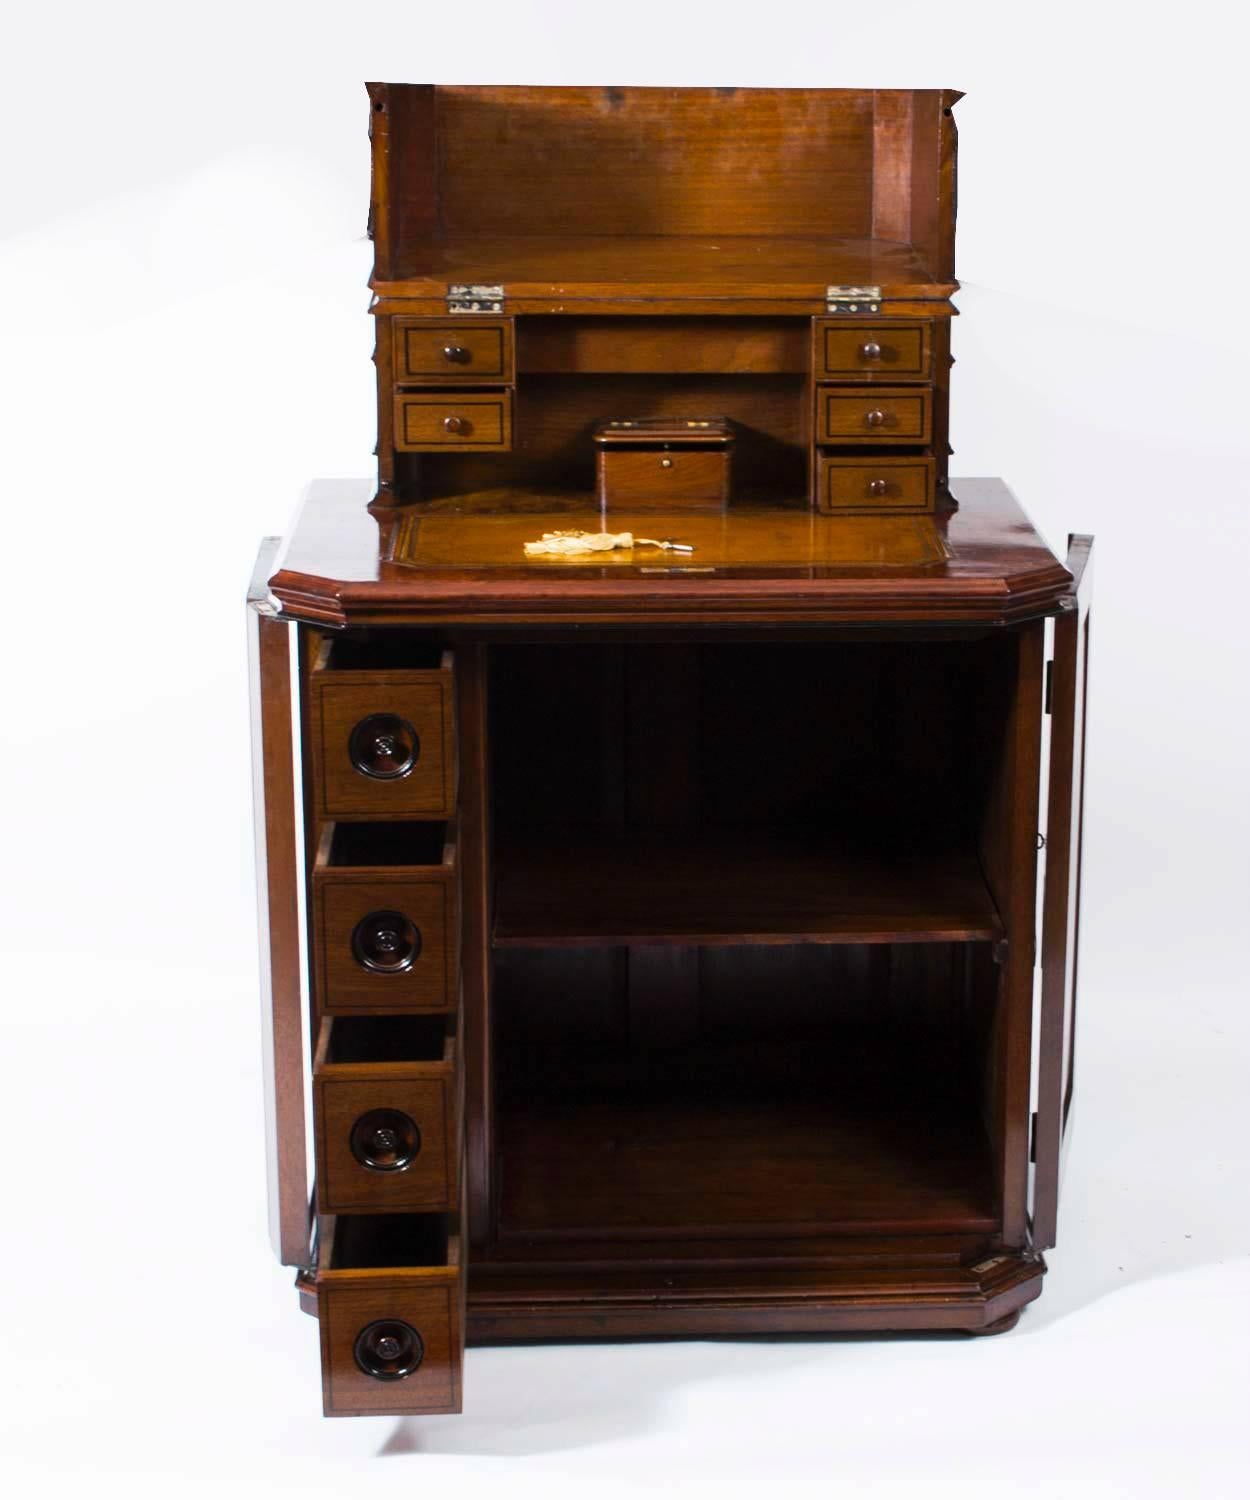 English Antique Victorian Walnut Davenport Desk, circa 1850